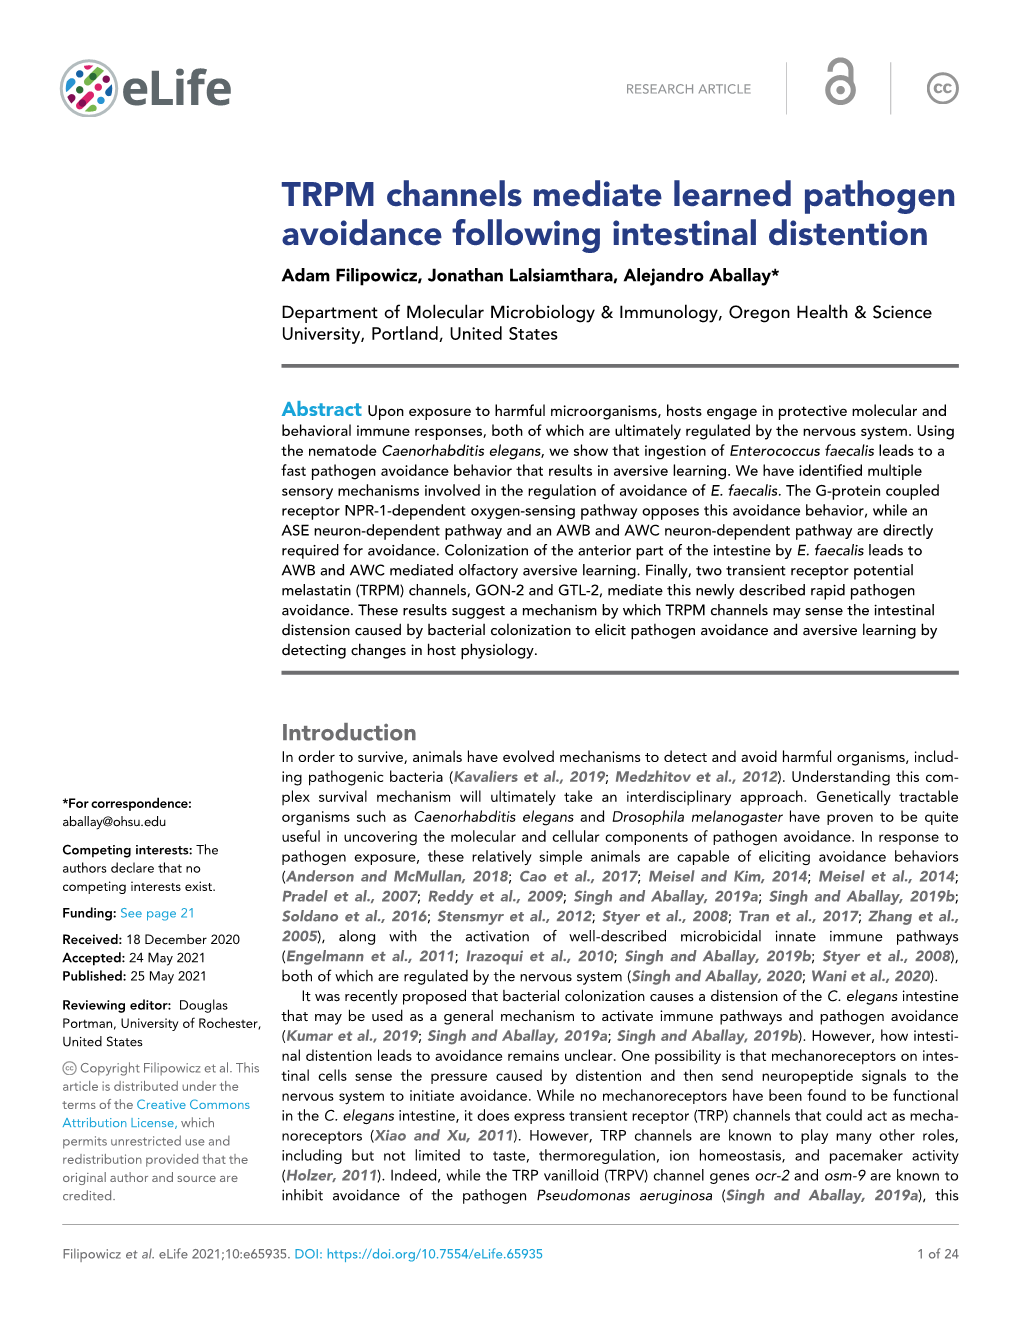 TRPM Channels Mediate Learned Pathogen Avoidance Following Intestinal Distention Adam Filipowicz, Jonathan Lalsiamthara, Alejandro Aballay*